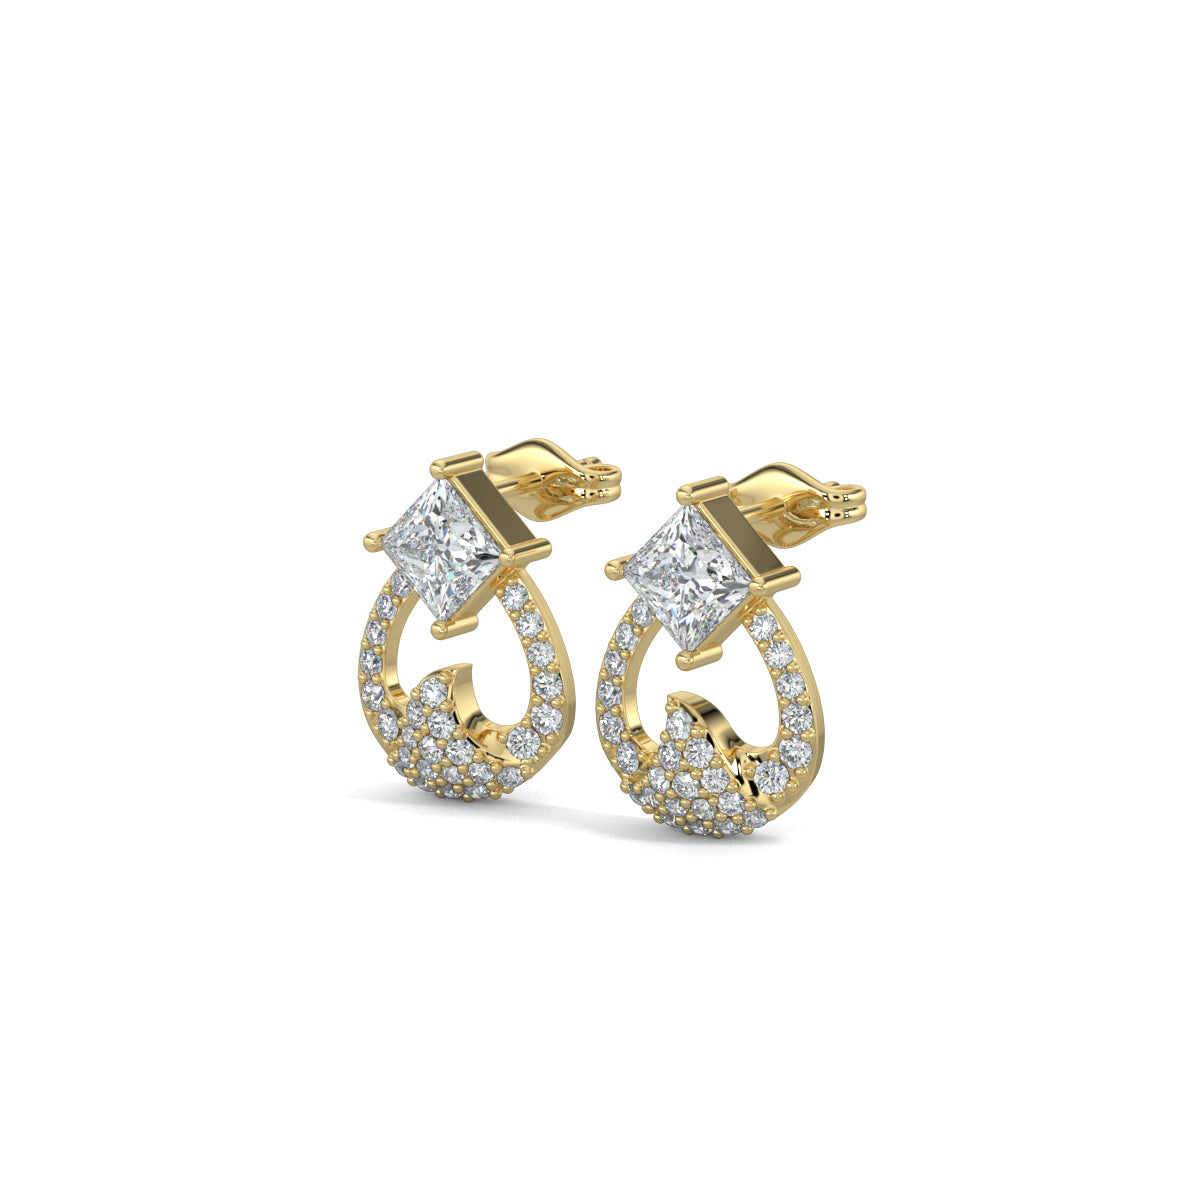 Yellow Gold, Diamond Earrings, Natural diamond stud earrings, Lab-grown diamond stud earrings, GlamourCrest earrings, Princess-cut diamond earrings, Diamond stud earrings, Wave-shaped earrings, Sophisticated jewelry, Elegant accessories, Glamorous earrings